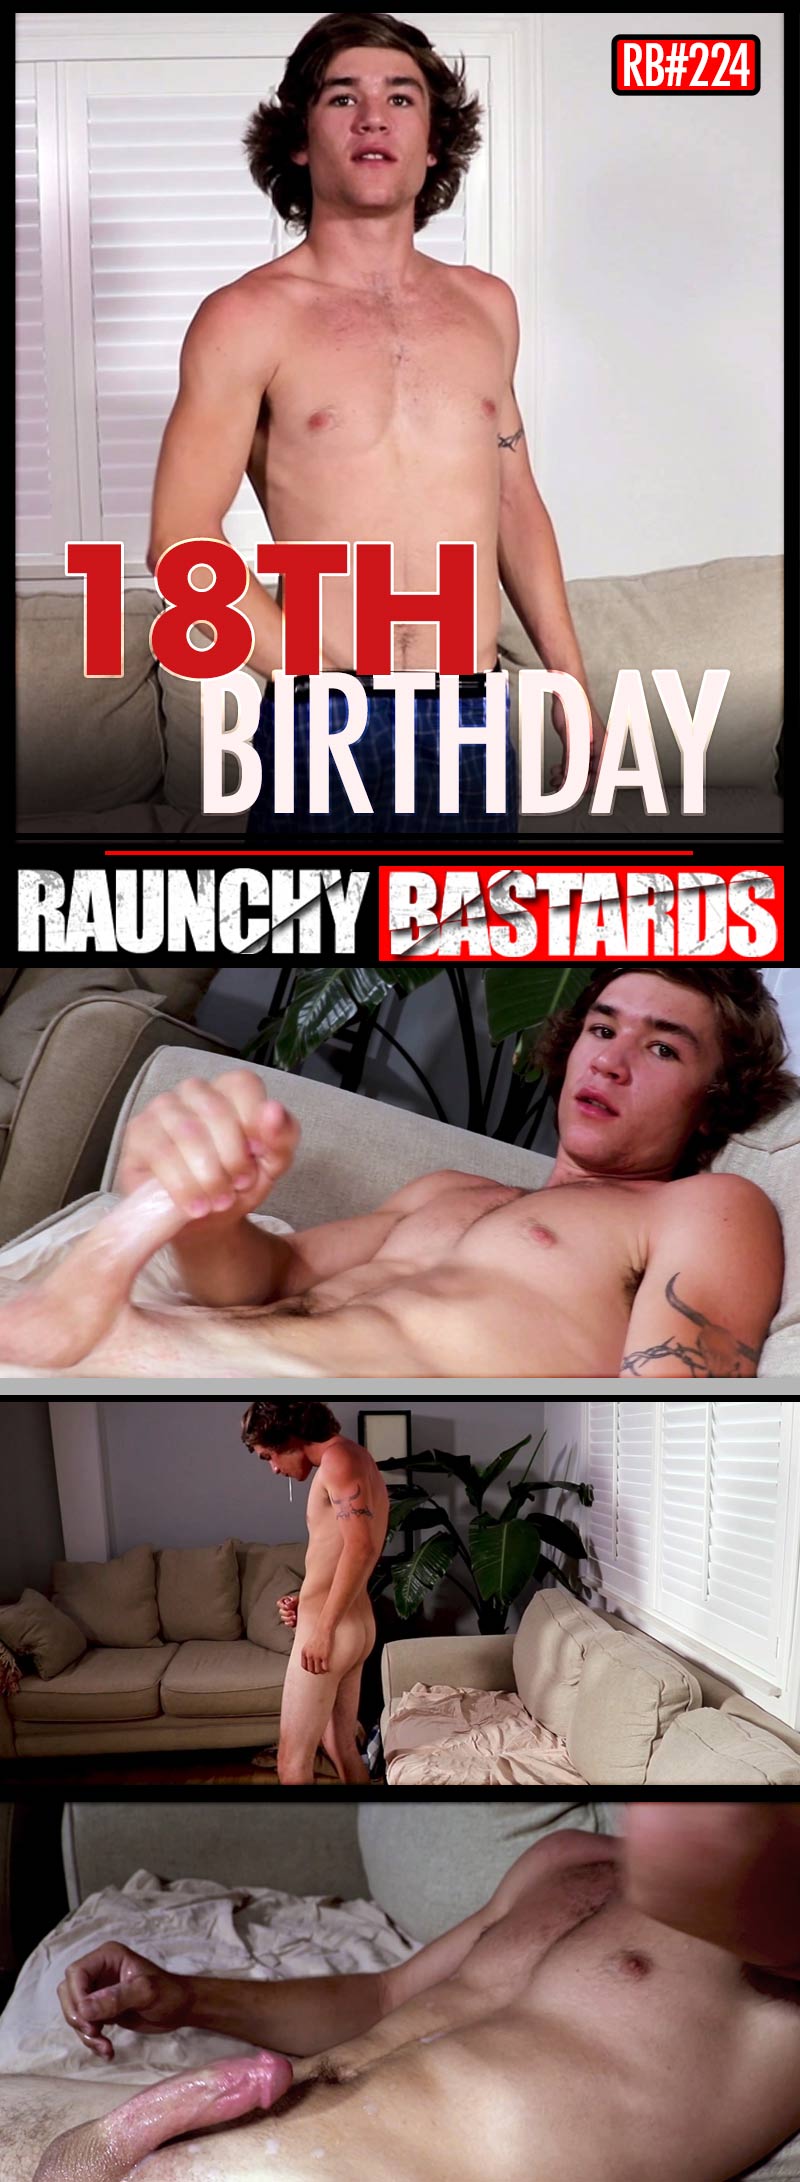 RaunchyBastards #224: Landon Matthews' 18th Birthday - WAYBIG